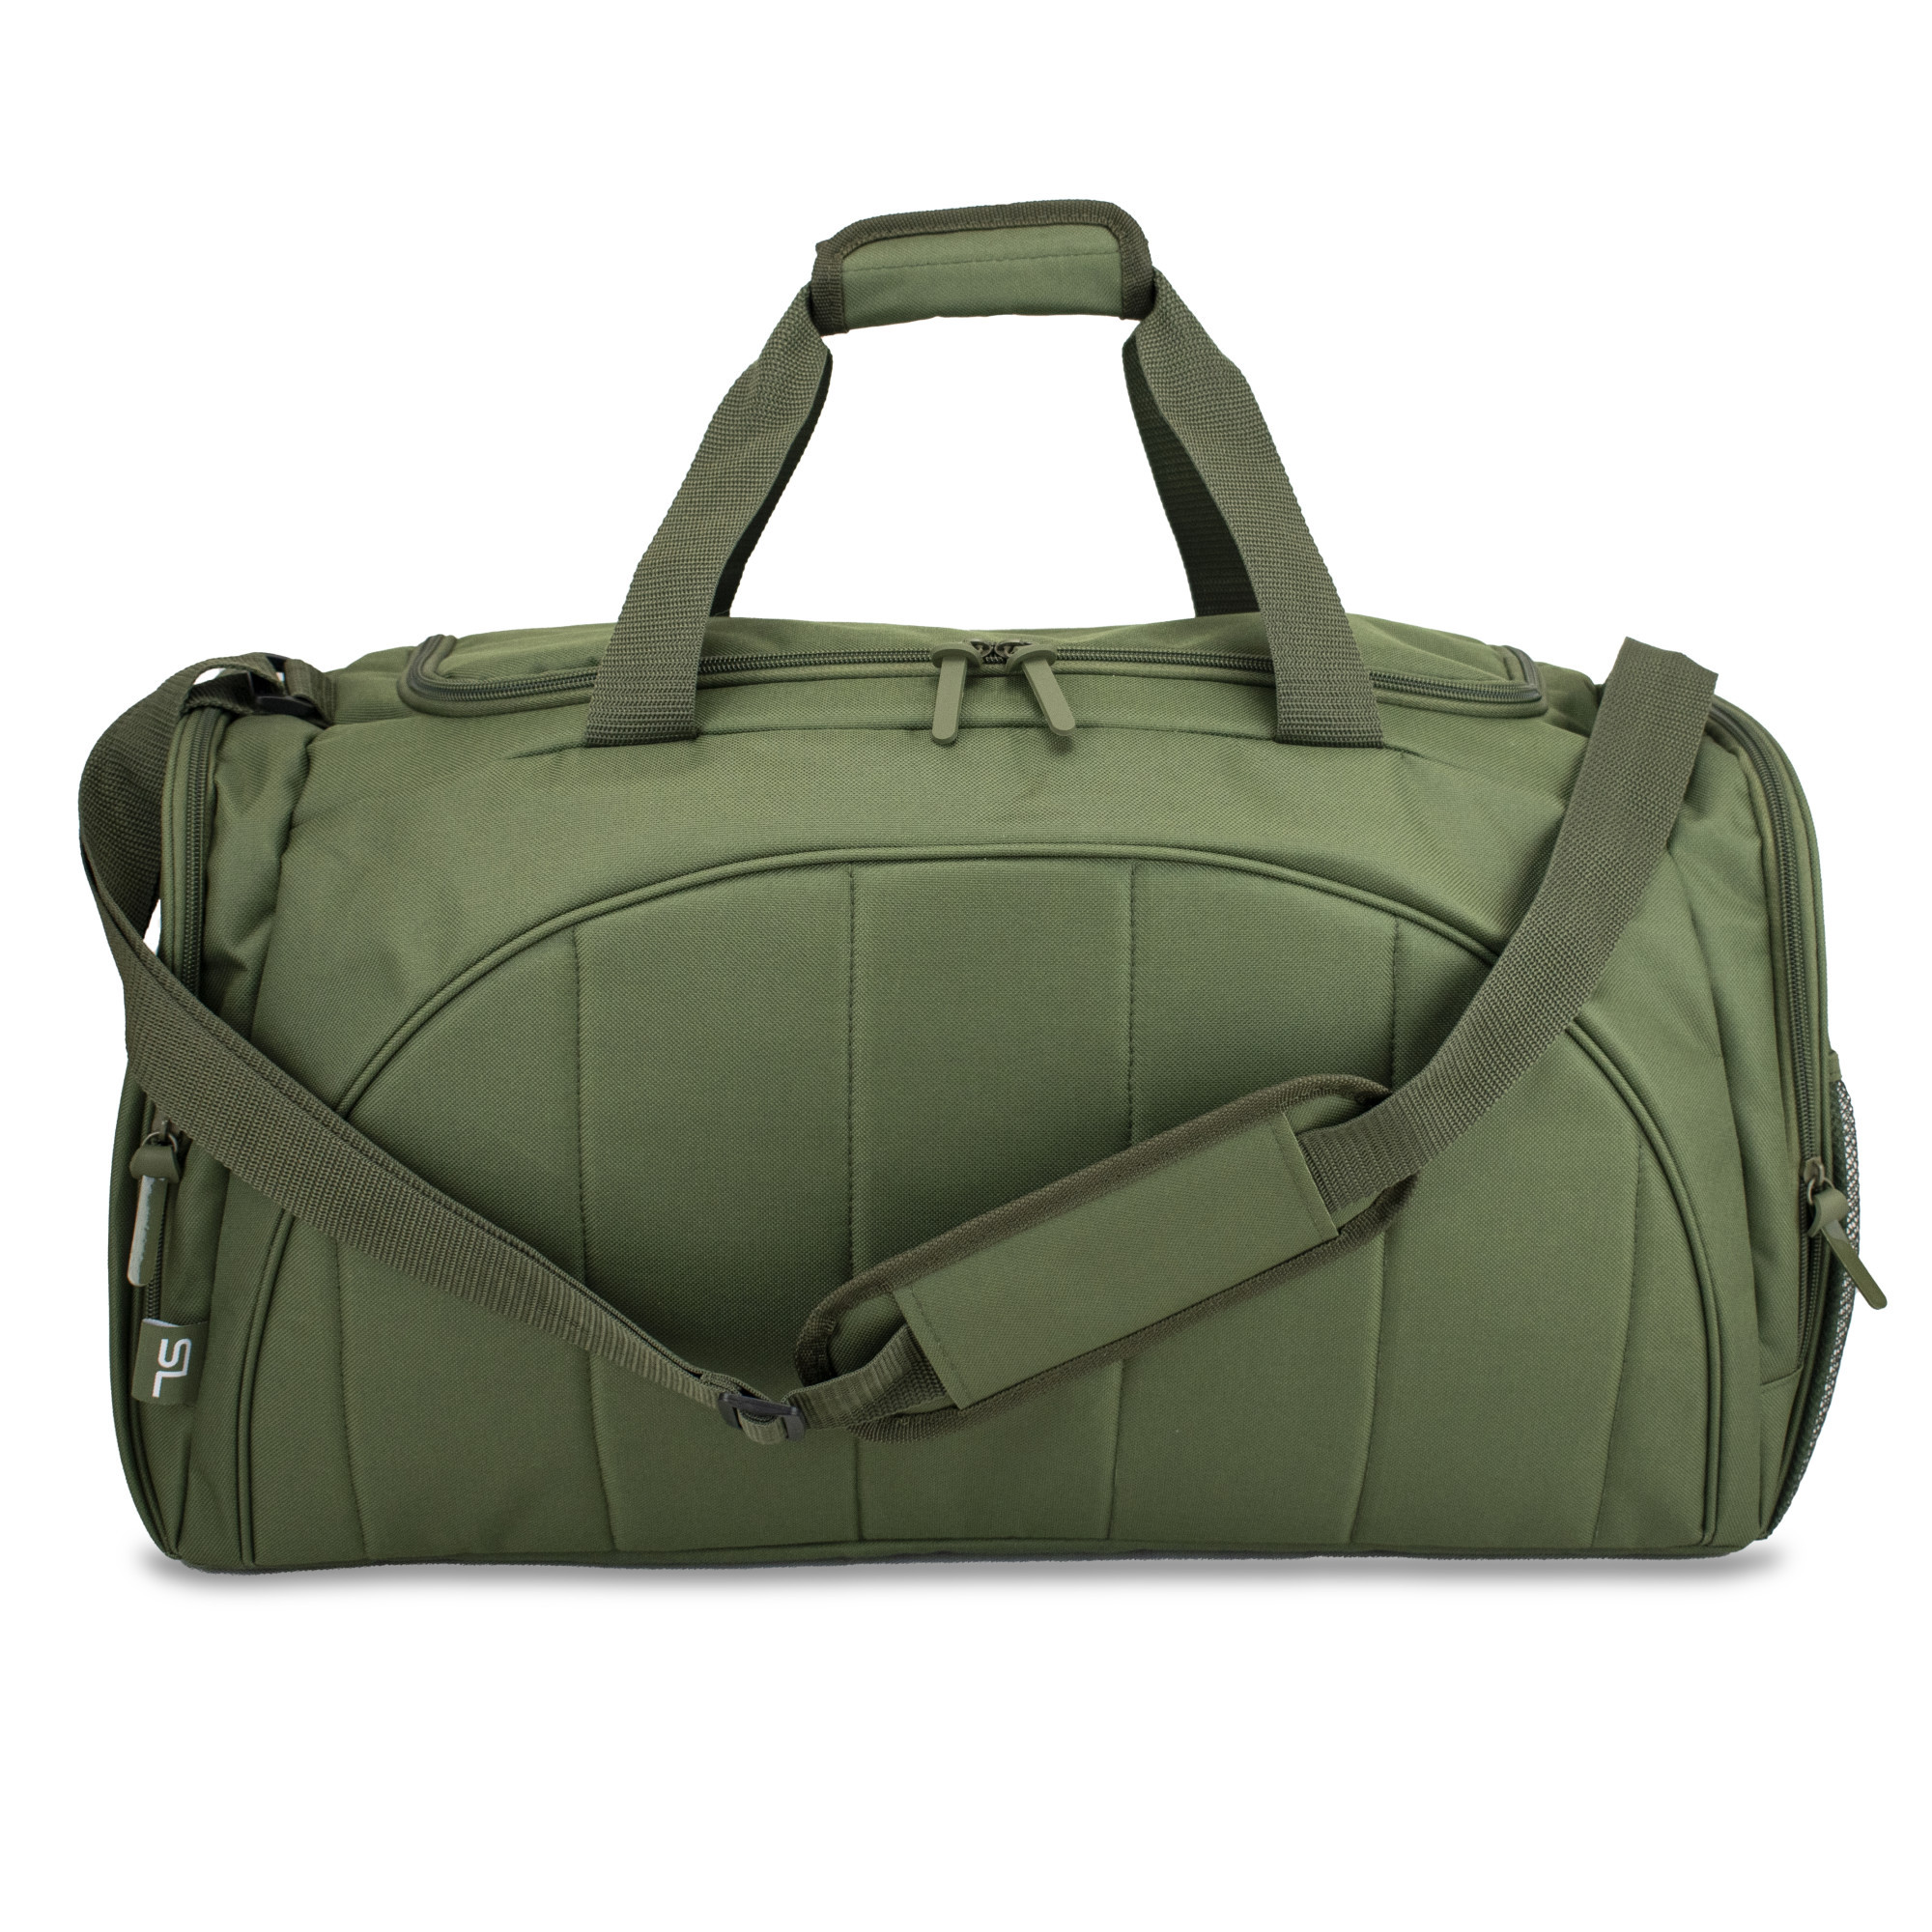 Semiline Fitness_Travel Bag A3029-3 Khaki 57 cm x 30,5 cm x 27 cm